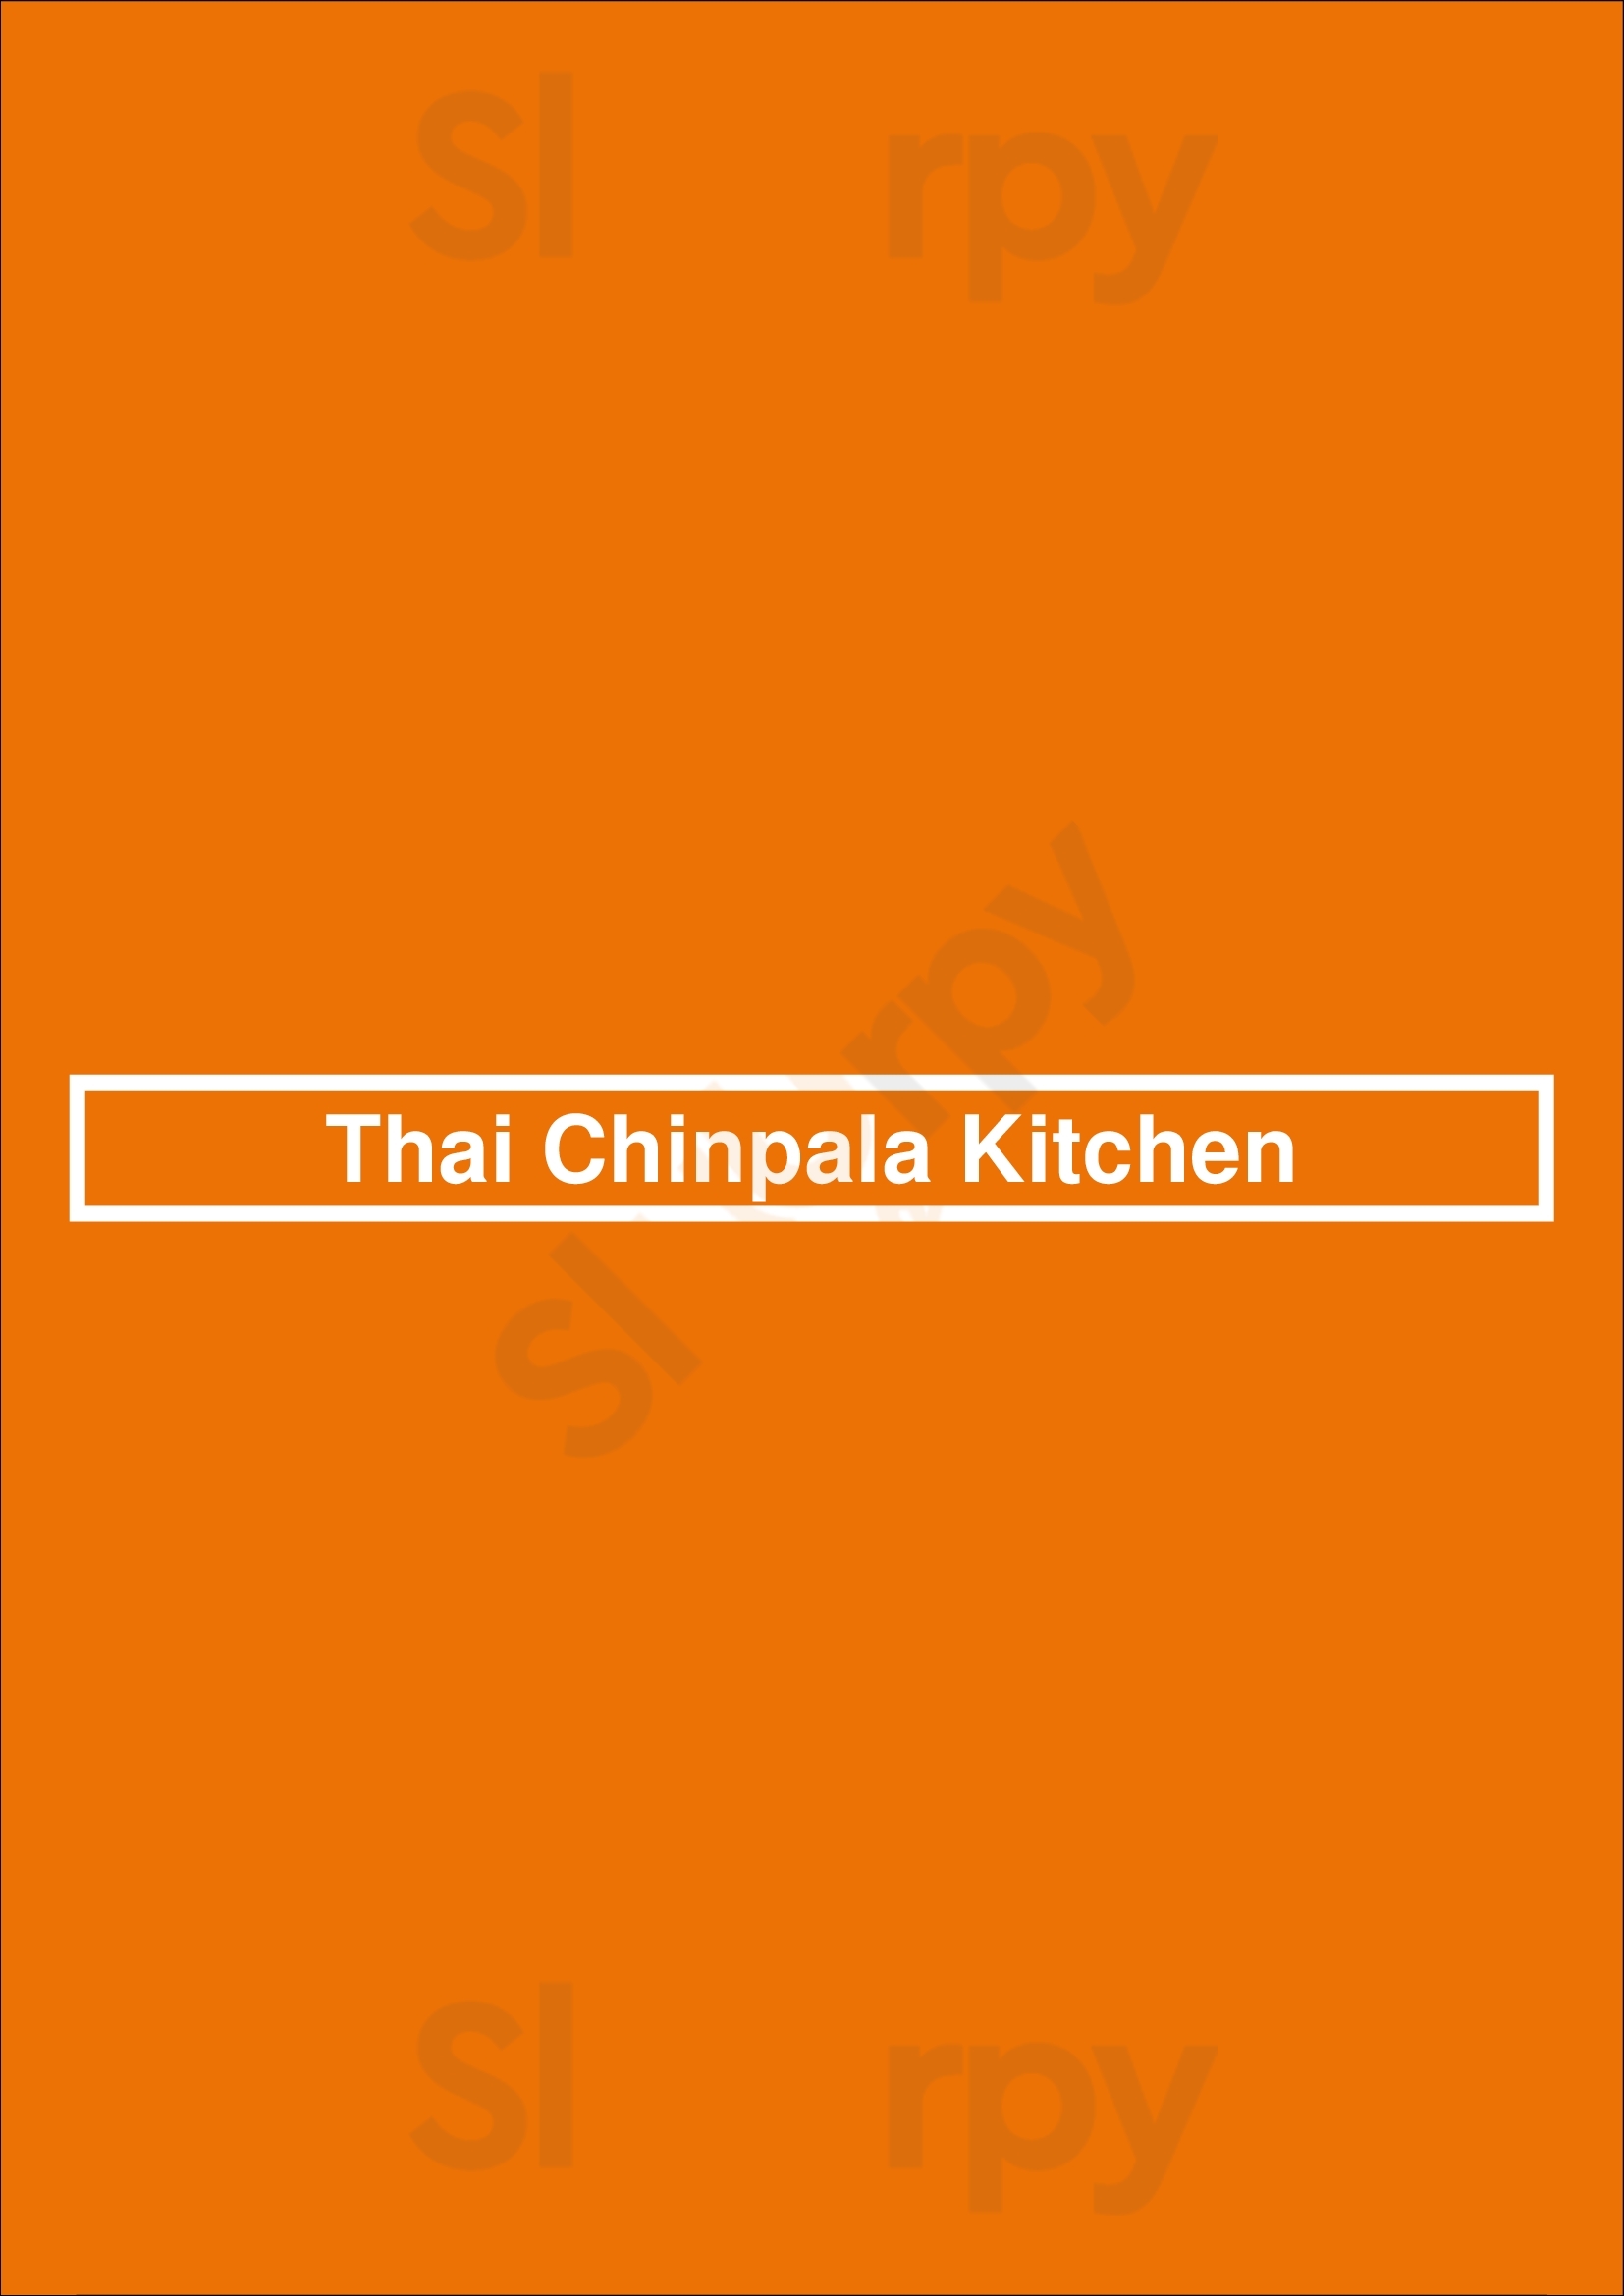 Thai Chinpala Kitchen Brisbane Menu - 1